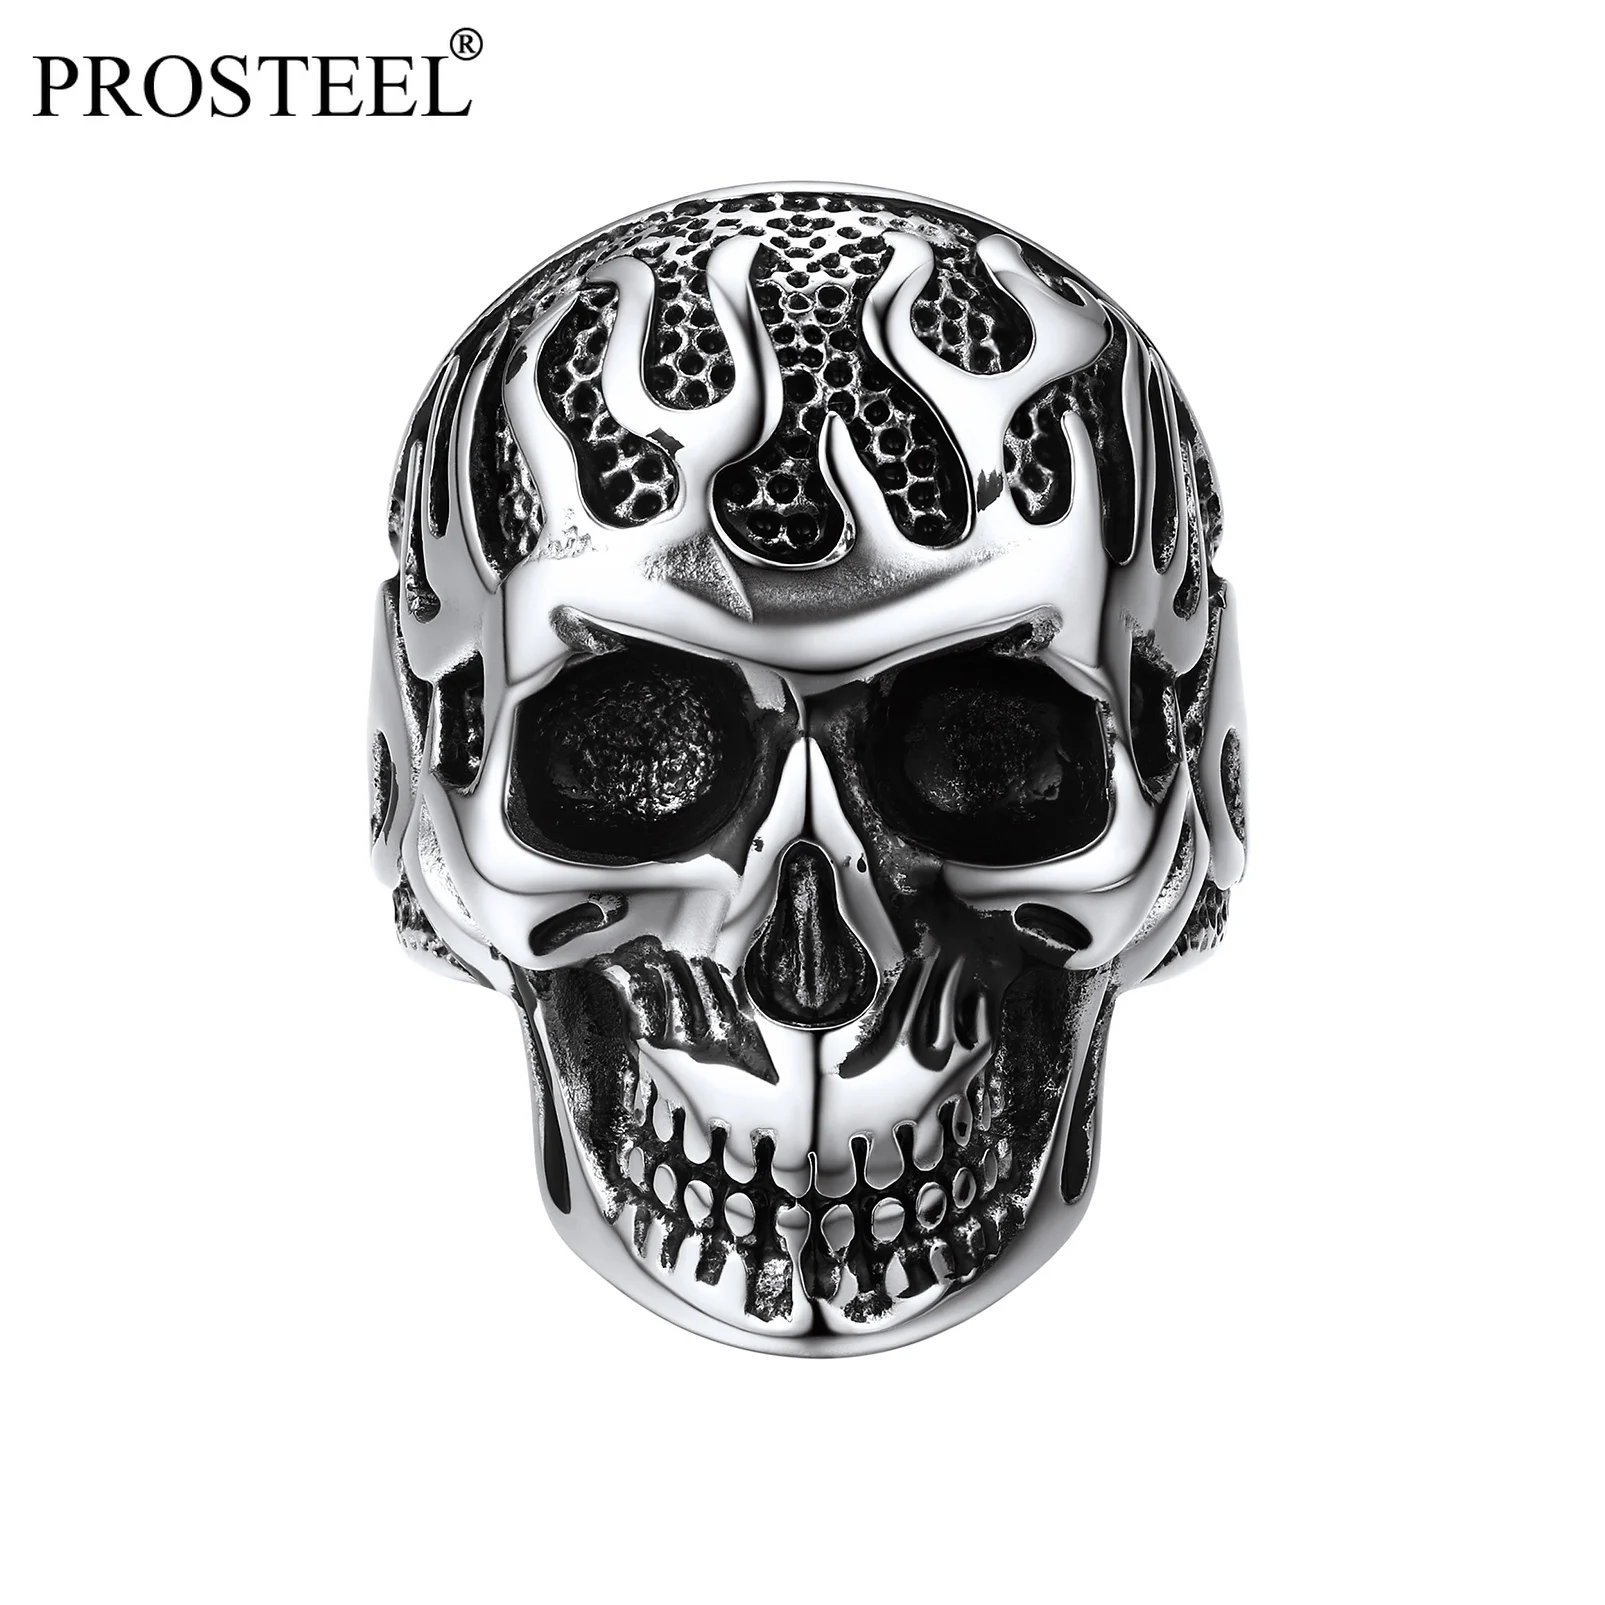 PROSTEEL Vintage Fire Skull Pinky Rings Gothic Punk Stainless Steel/Black/Gold Color,Sizes 7-14 for Men Boys PSR40030